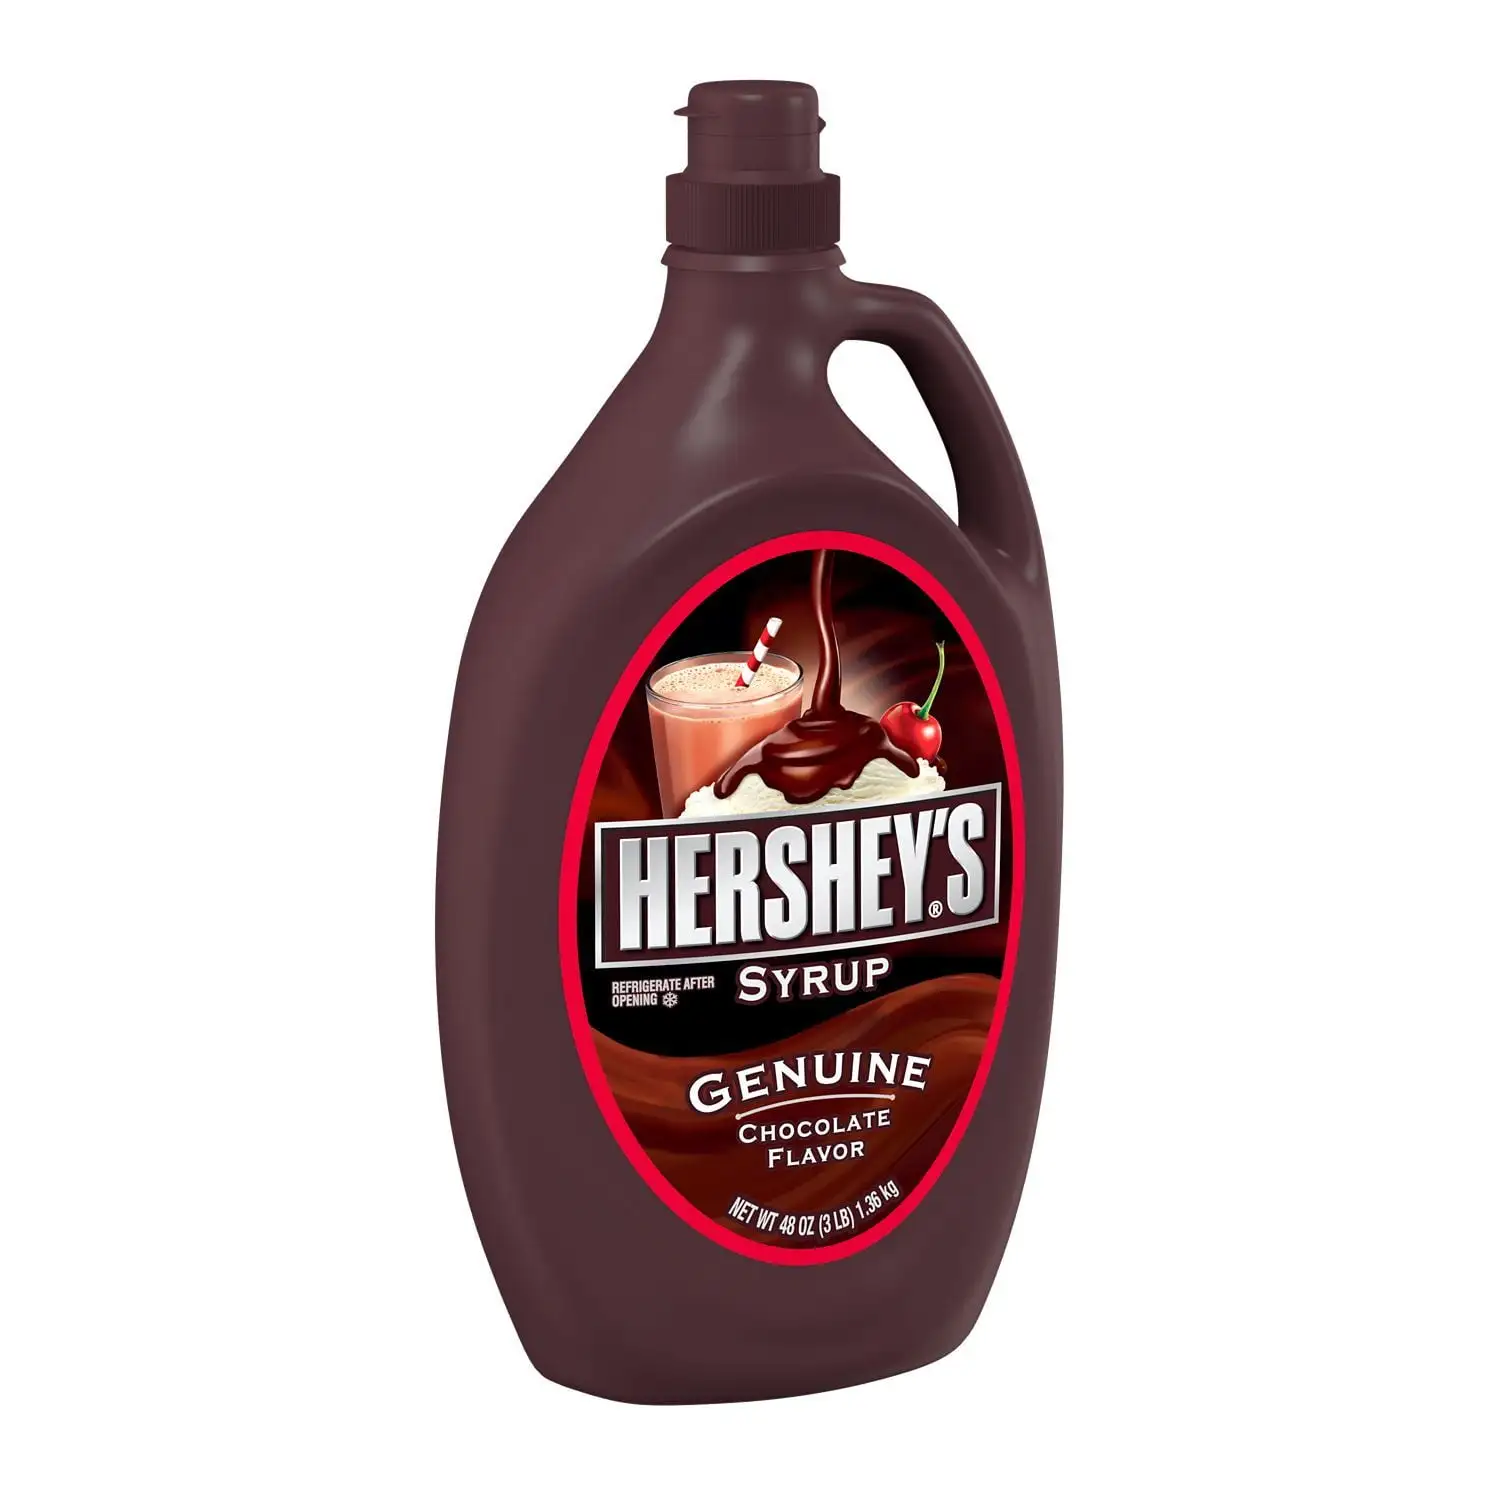 Hershey's Chocolate Syrup saus cokelat terbaik